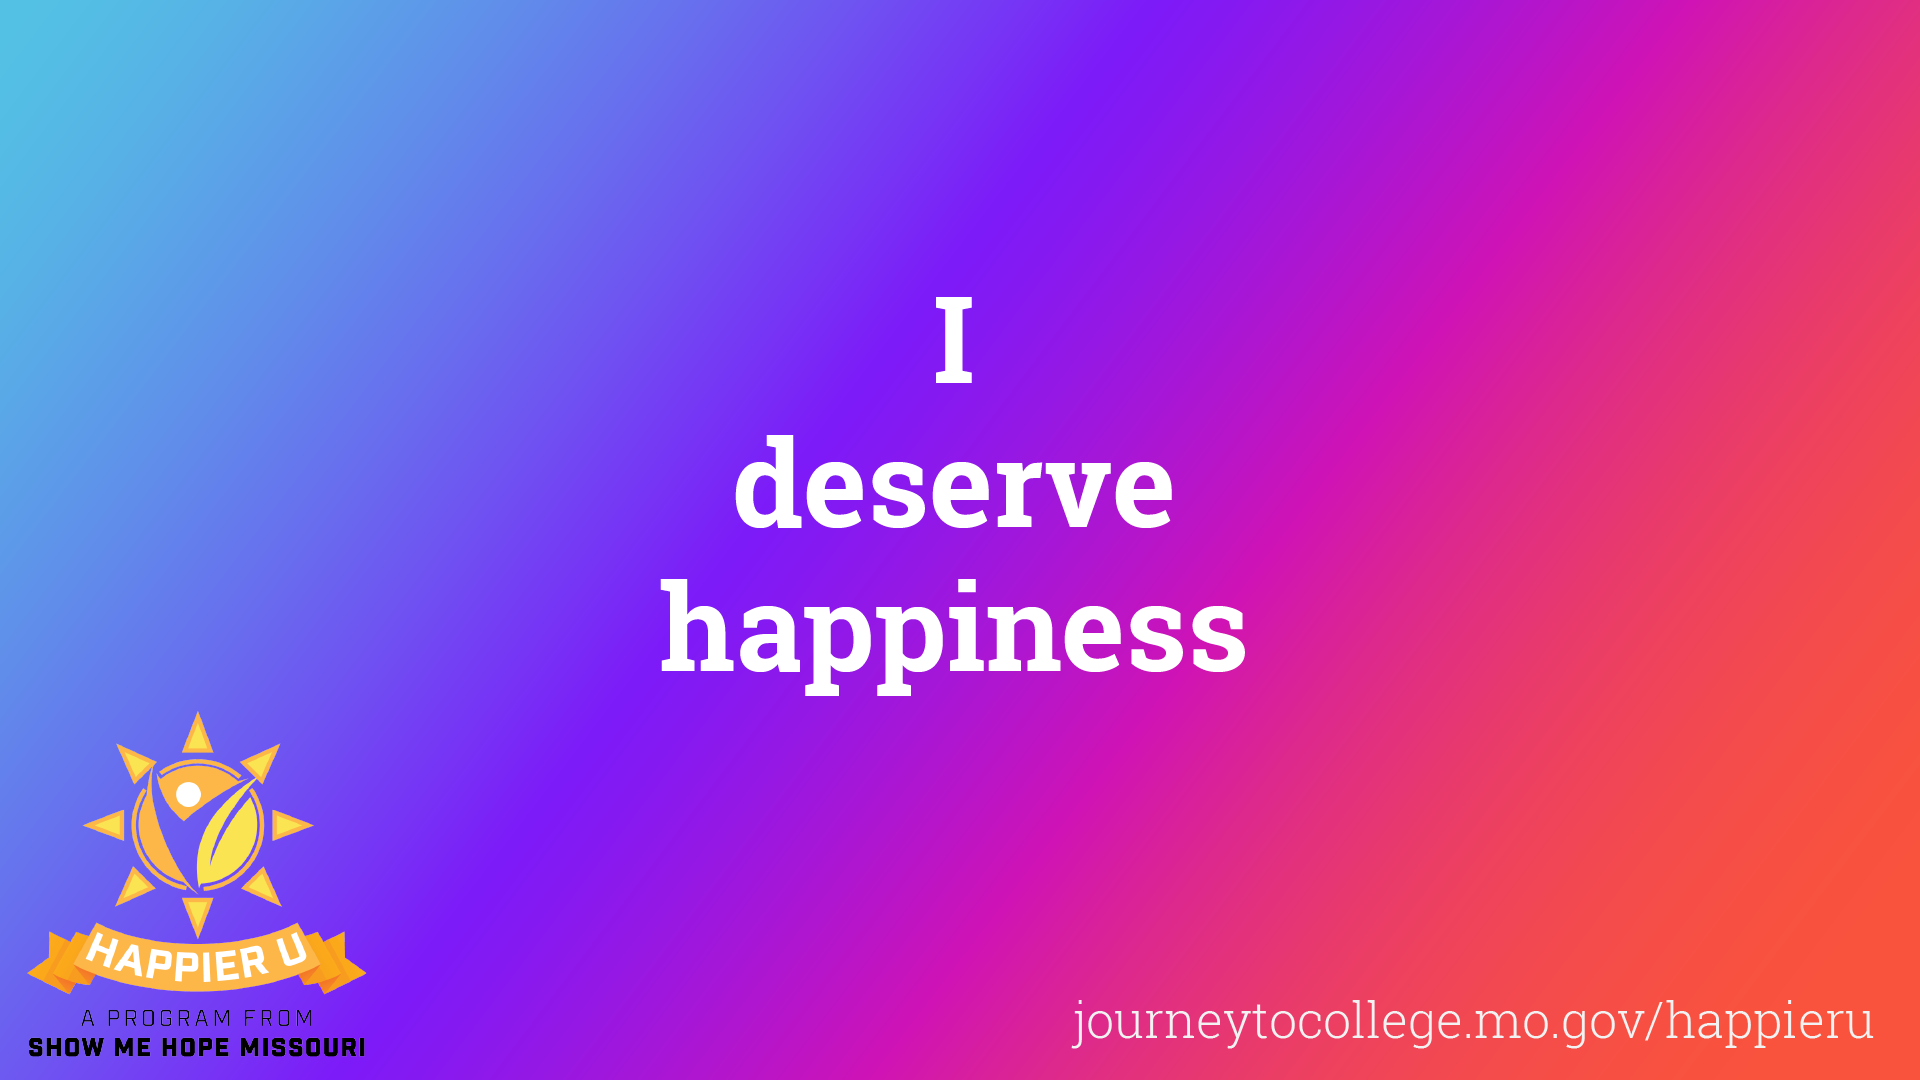 "I deserve happiness"